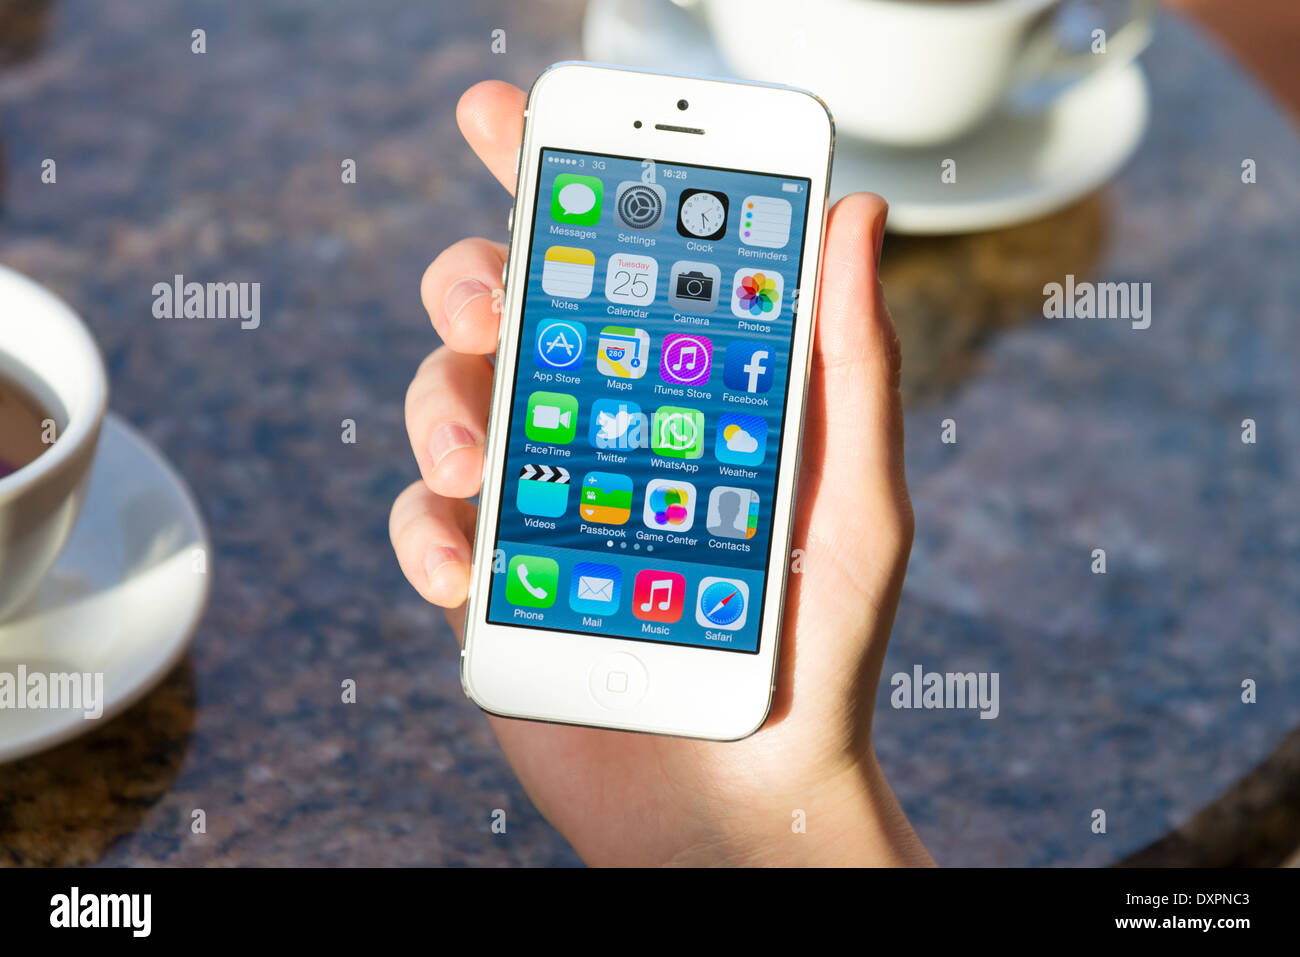 Pantalla de inicio de iOS 7 de Apple iPhone 5 Blanca en un café Foto de stock